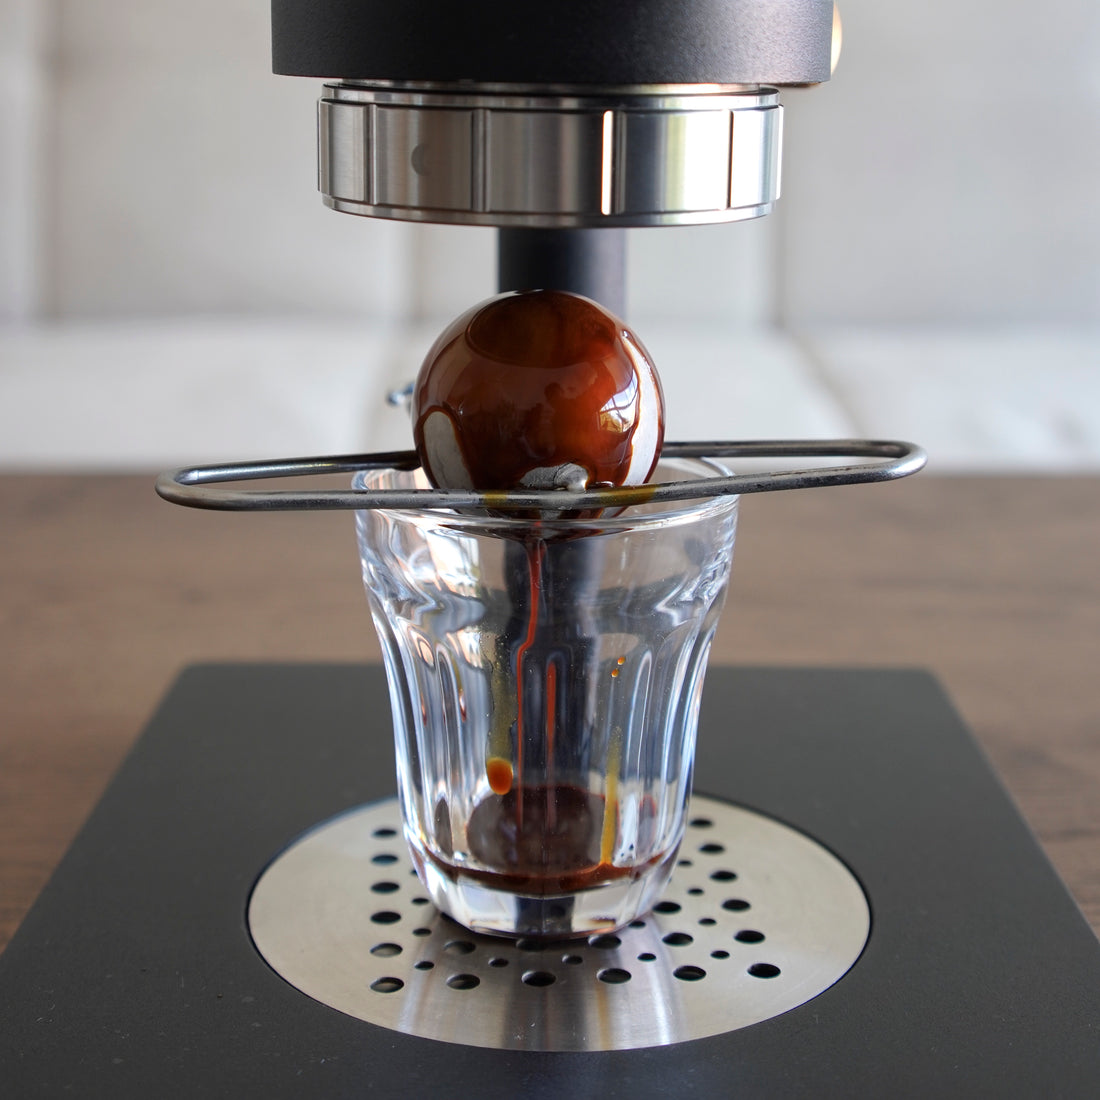 Extract Chilling Espresso Basic Barista Coffee Balls How to Extract Chill Espresso Coffee Brews